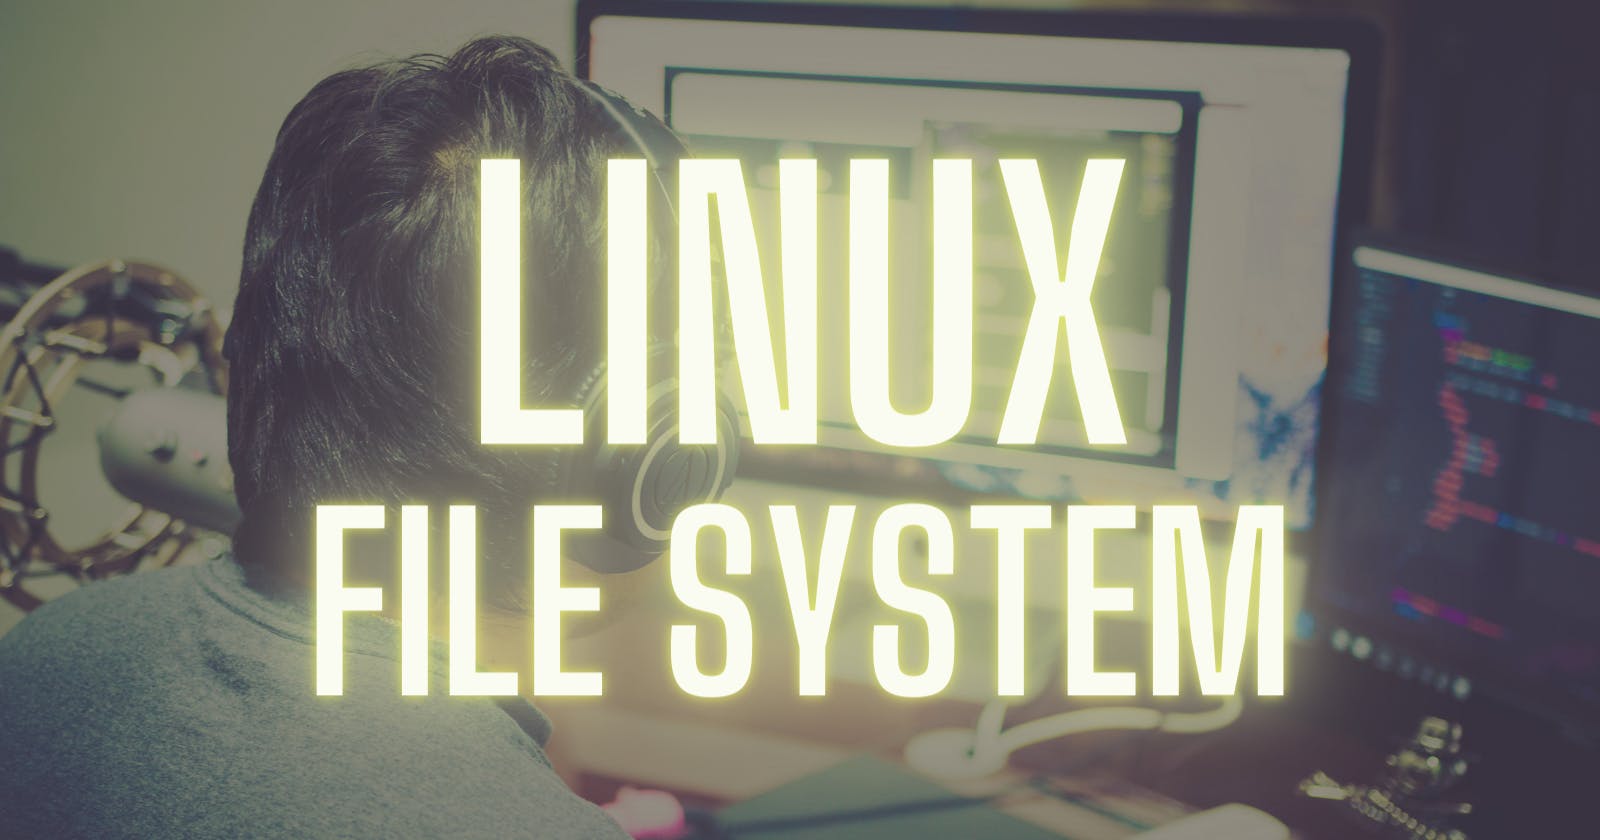 Linux File System